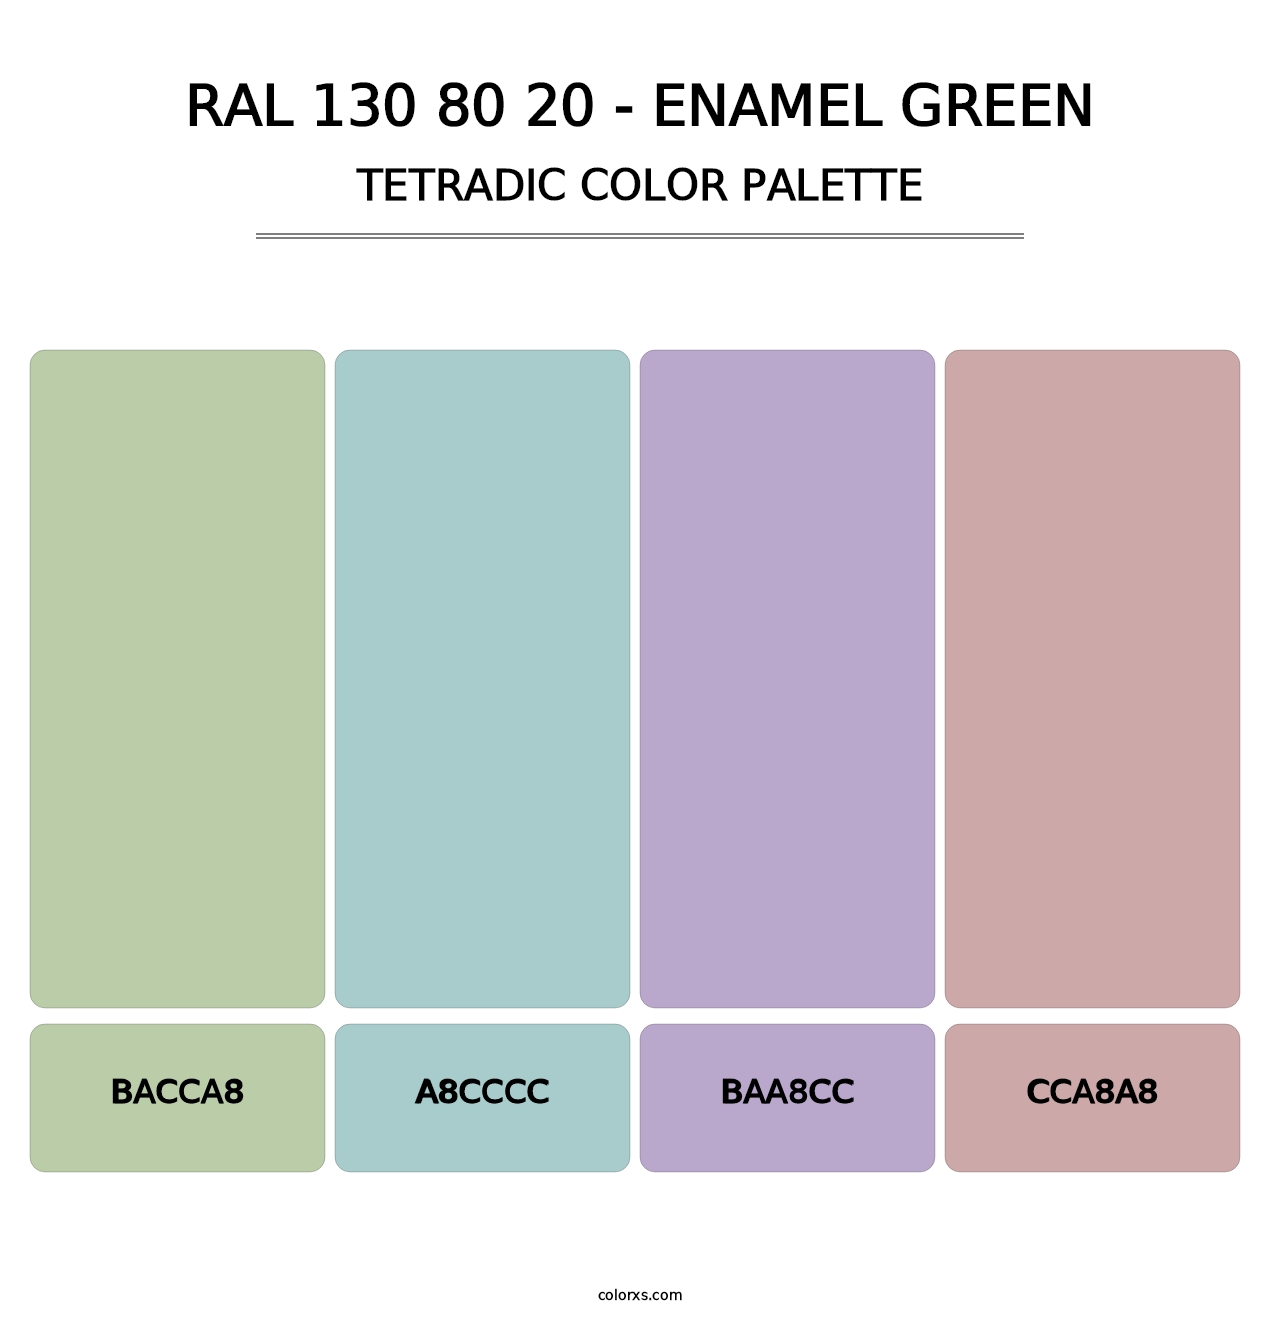 RAL 130 80 20 - Enamel Green - Tetradic Color Palette